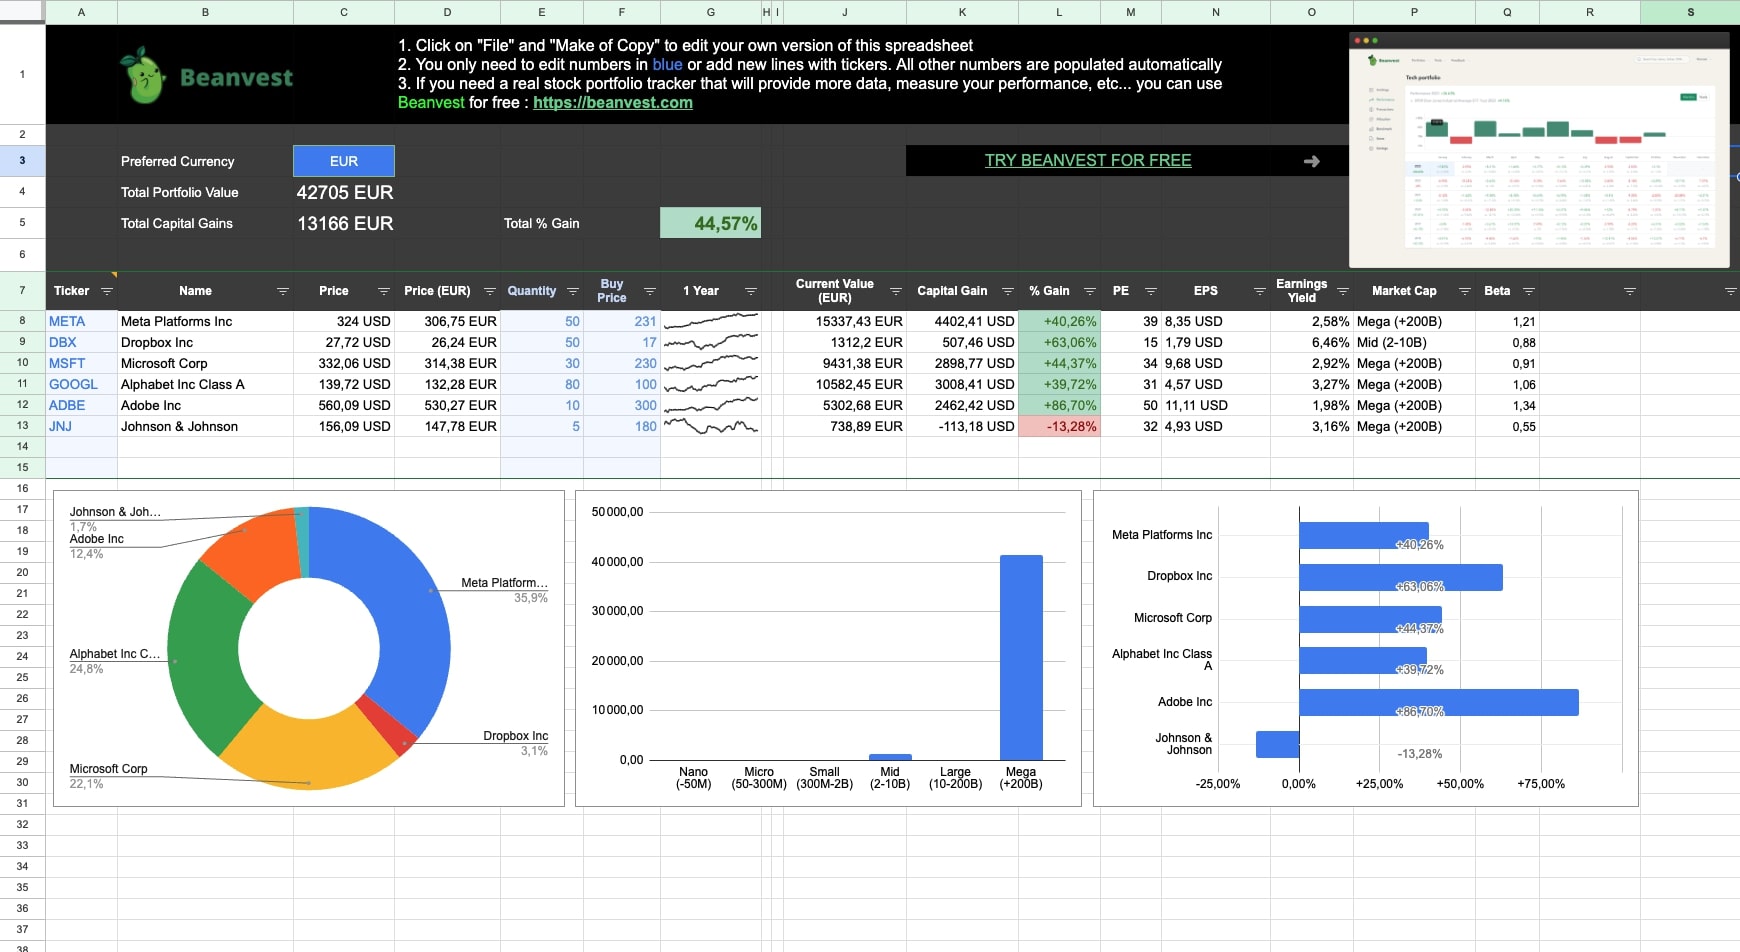 Free Stock Portfolio Tracker Spreadsheet